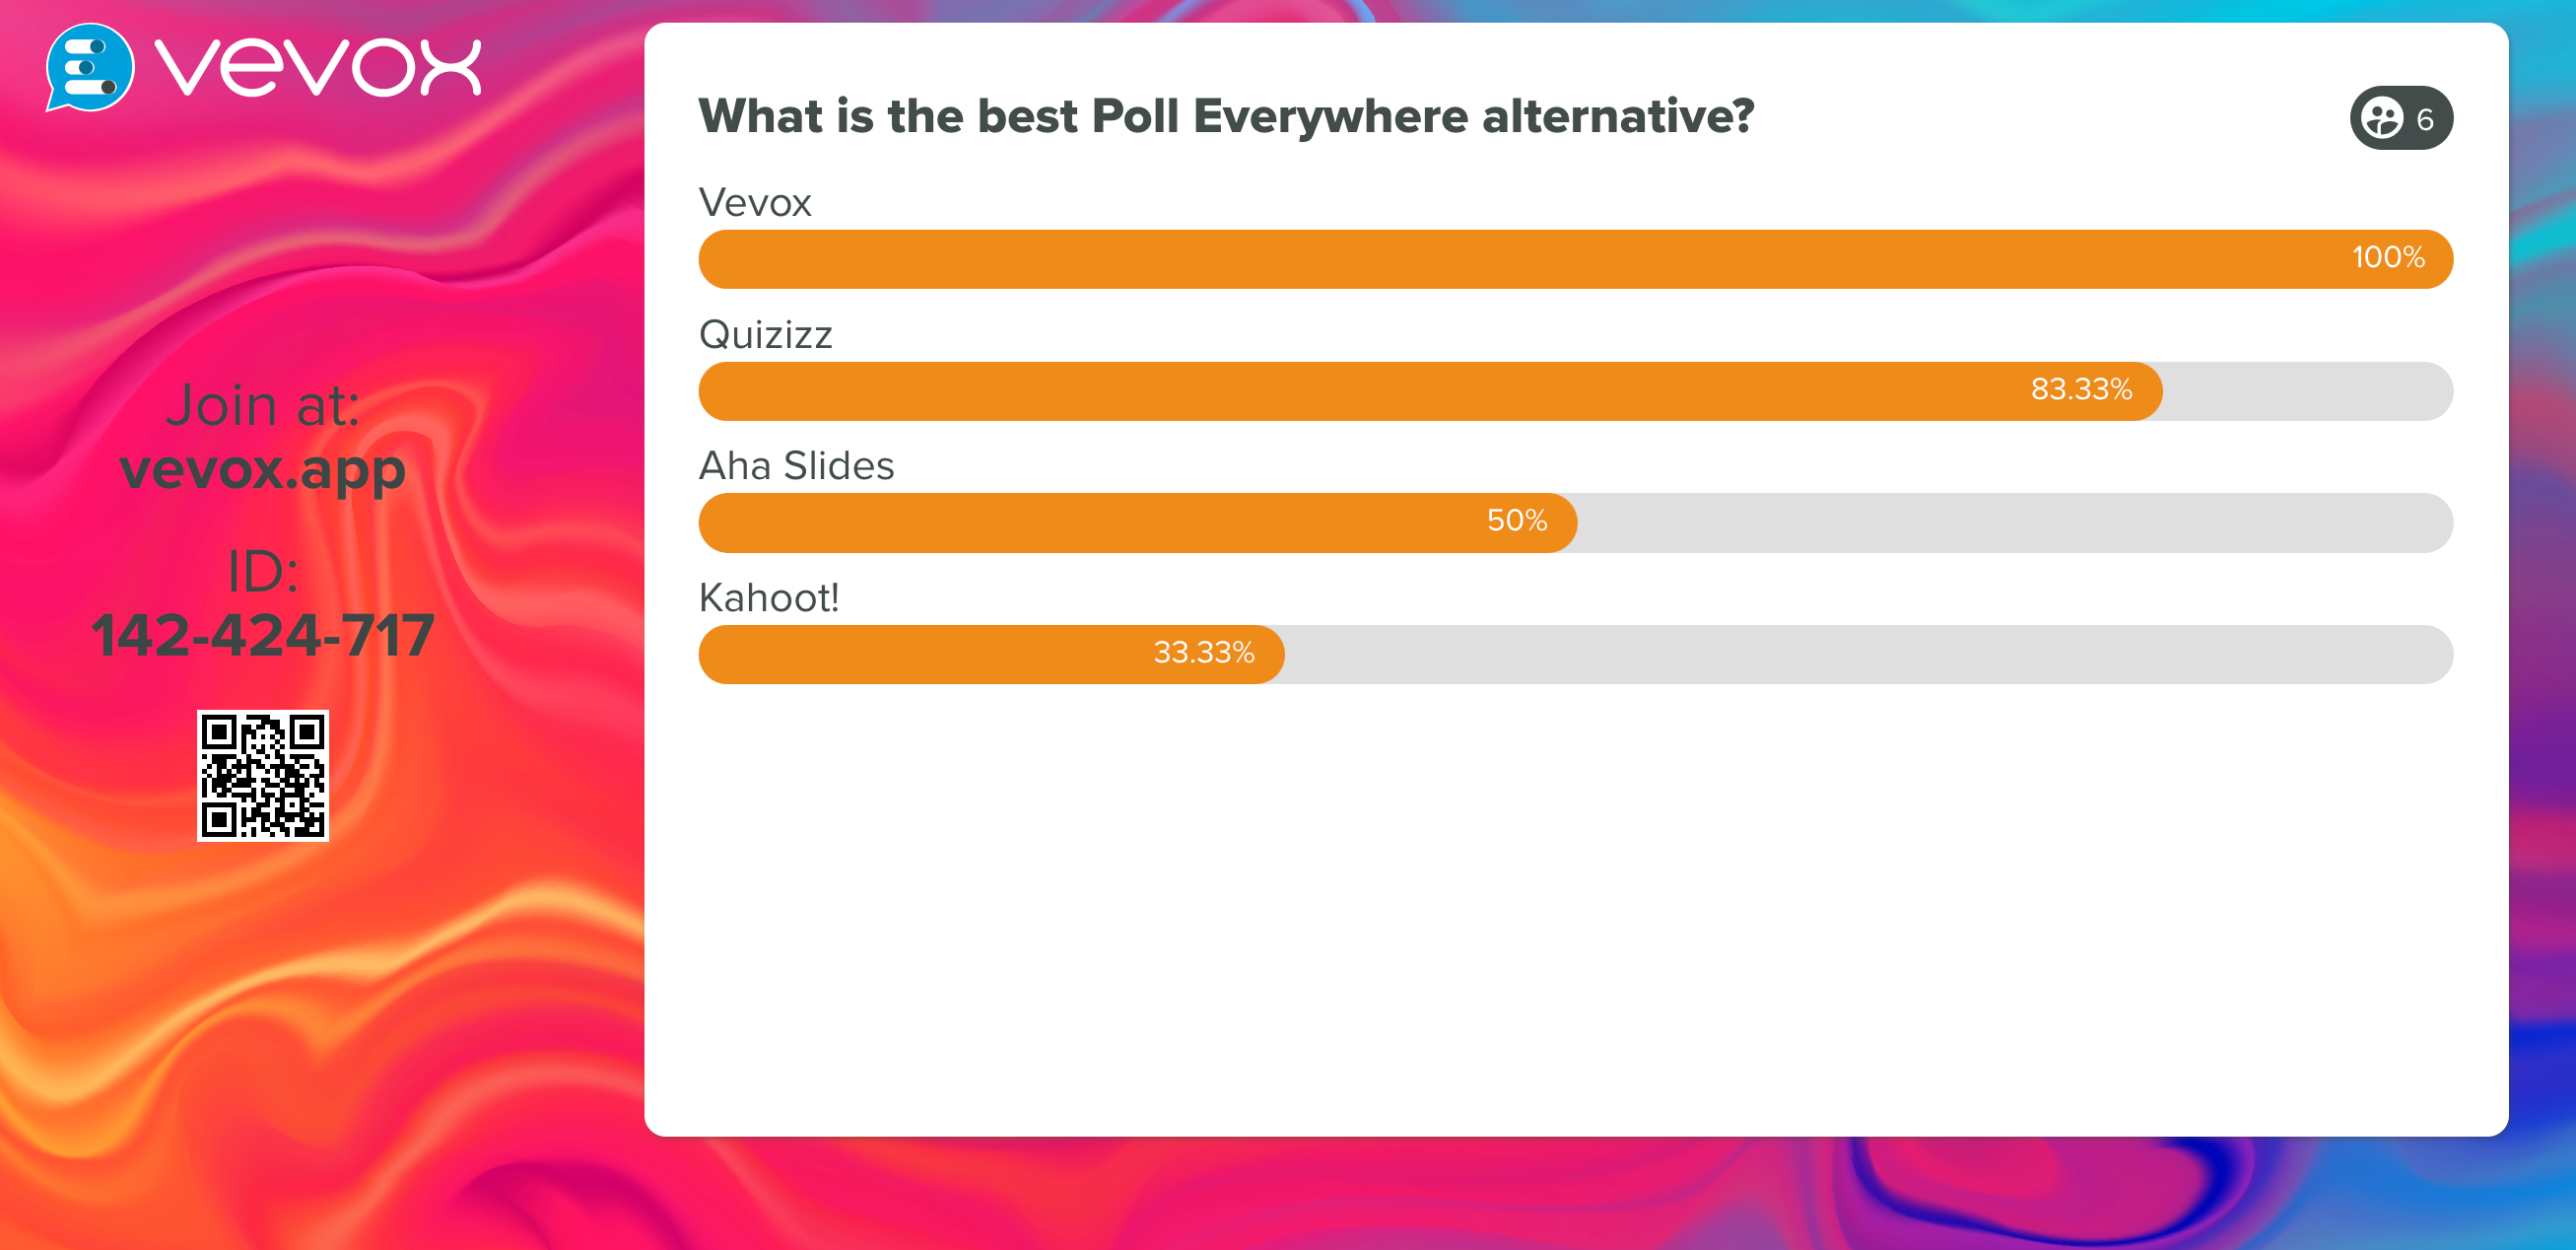 4 of the best Poll Everywhere alternatives